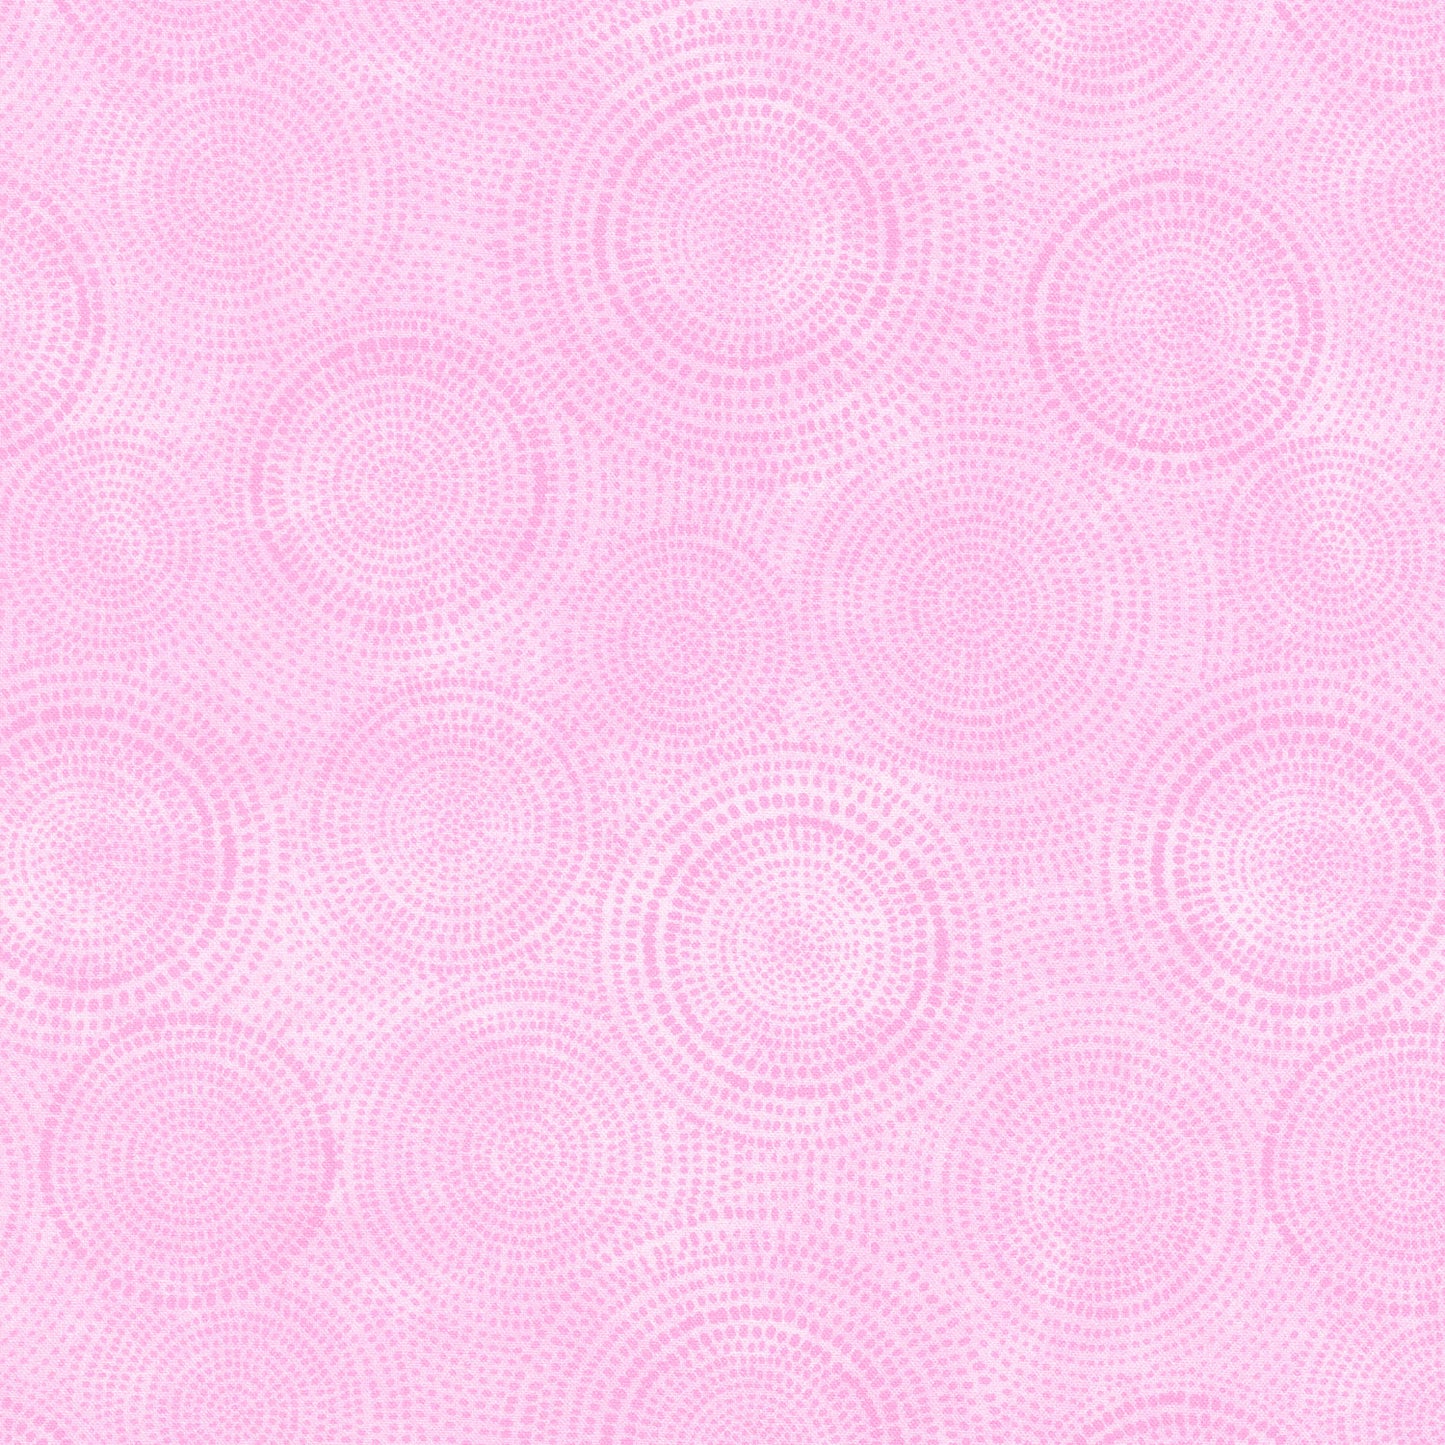 Radiance - Circle Dots Light Pink Yardage Primary Image